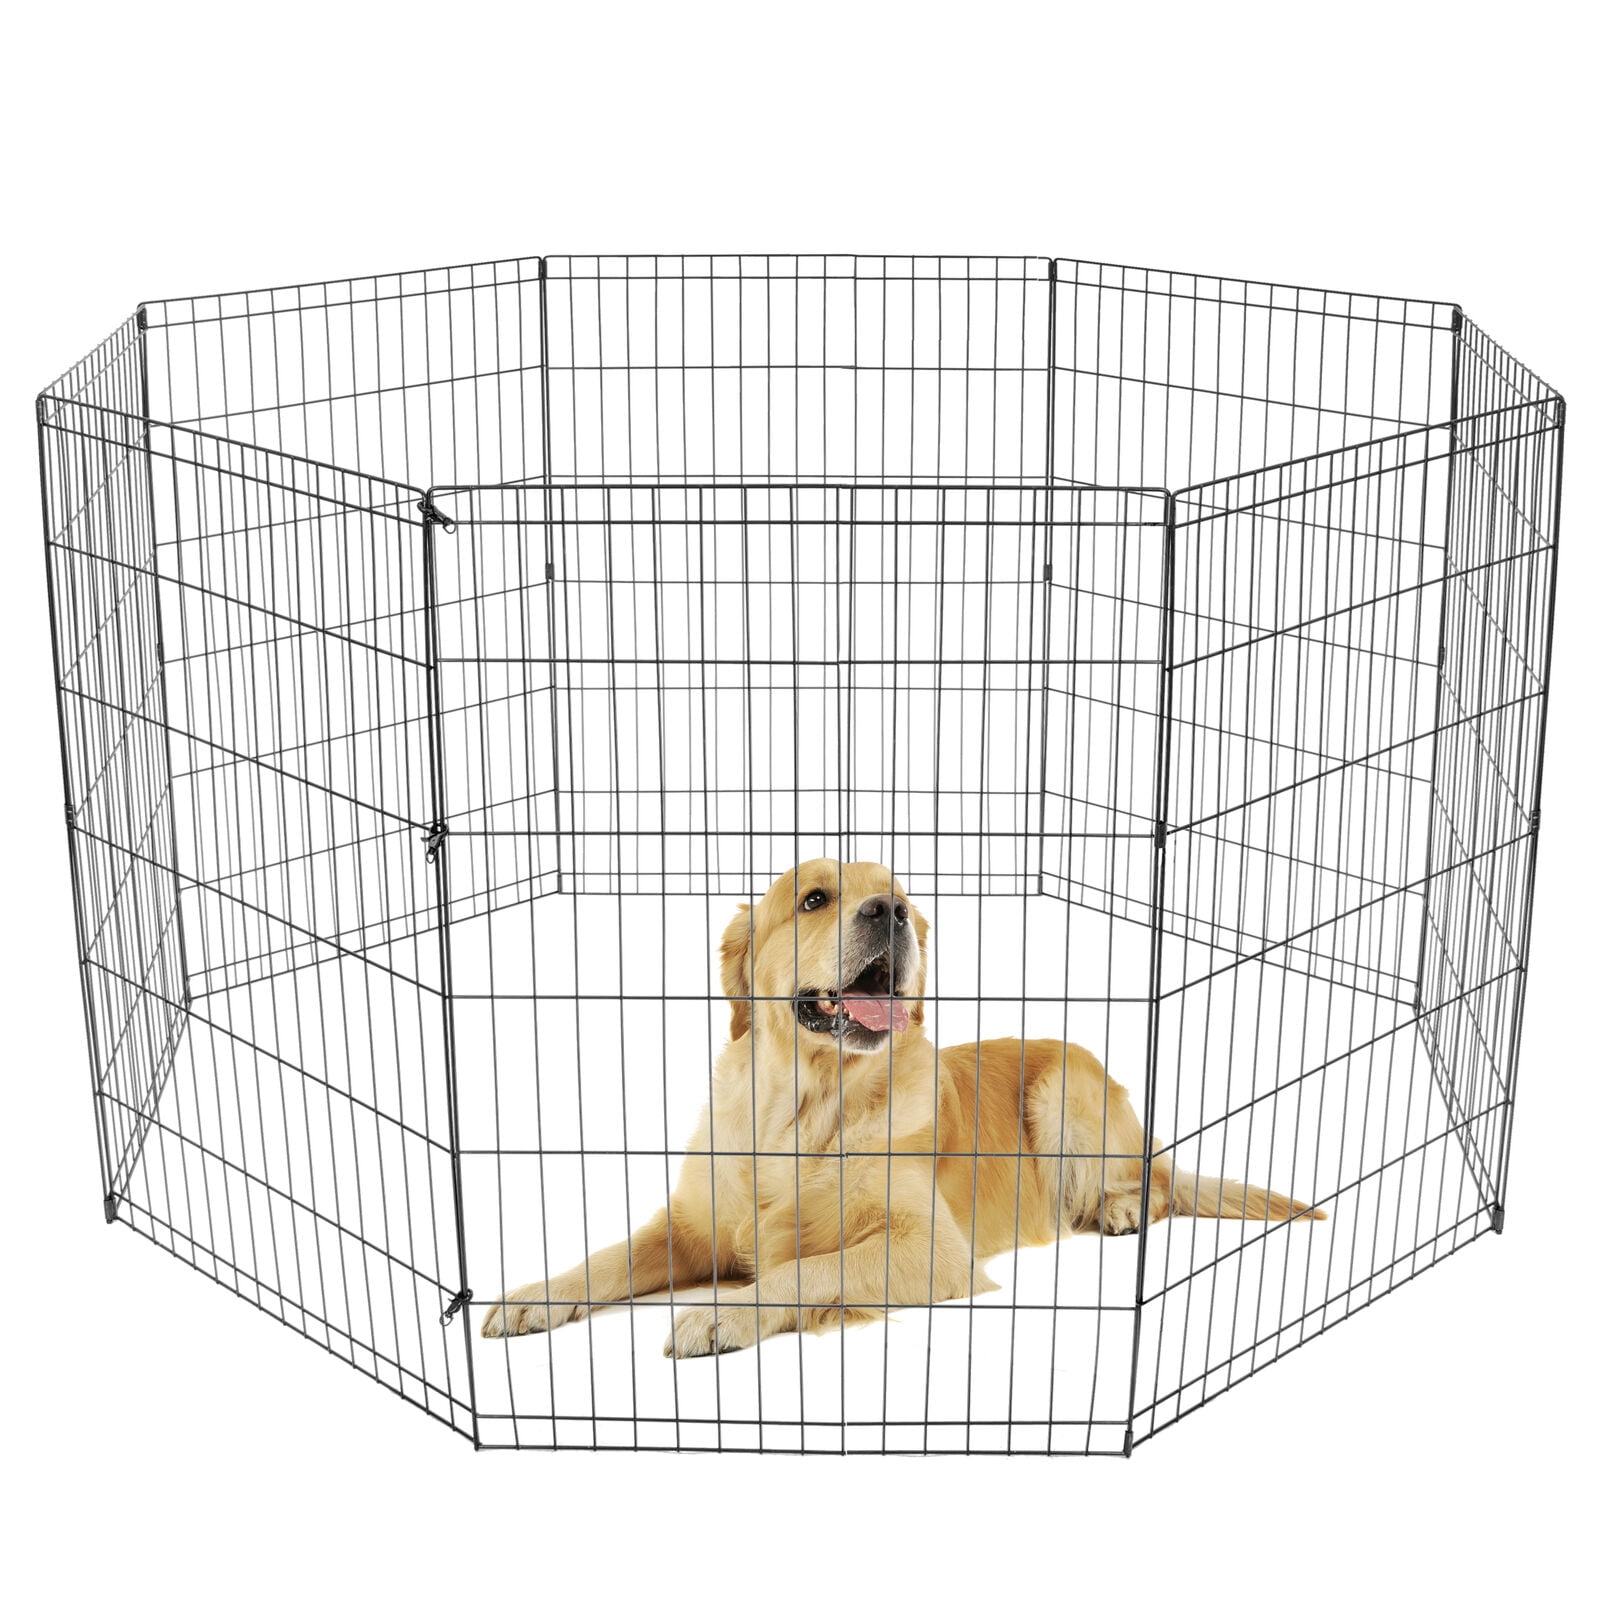 ZENSTYLE 36 Inch 8 Panels Indoor Outdoor Dog Playpen Large Crate Fence Pet Pen Cage -